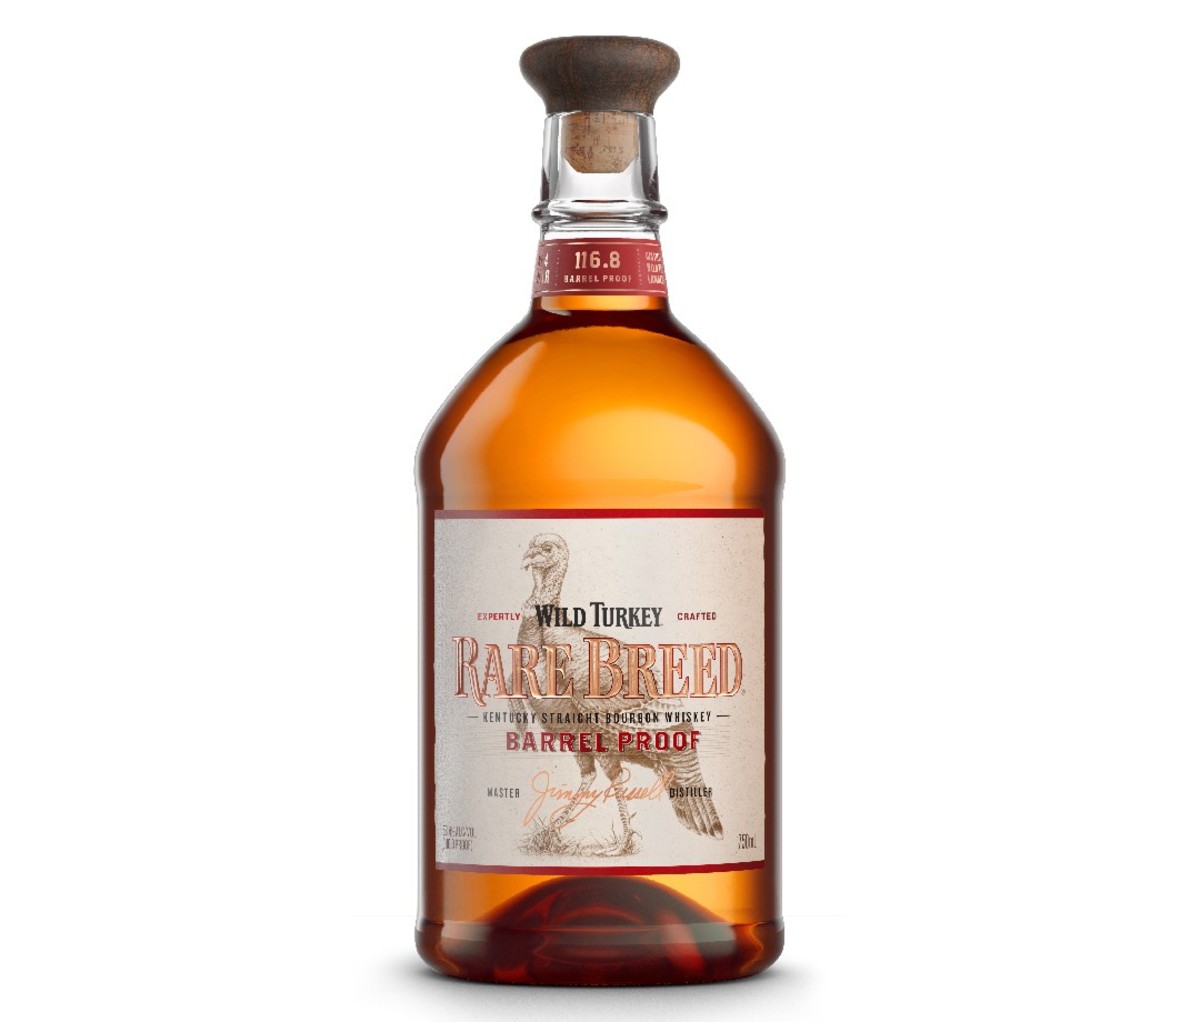 A bottle of Wild Turkey Rare Breed bourbon.